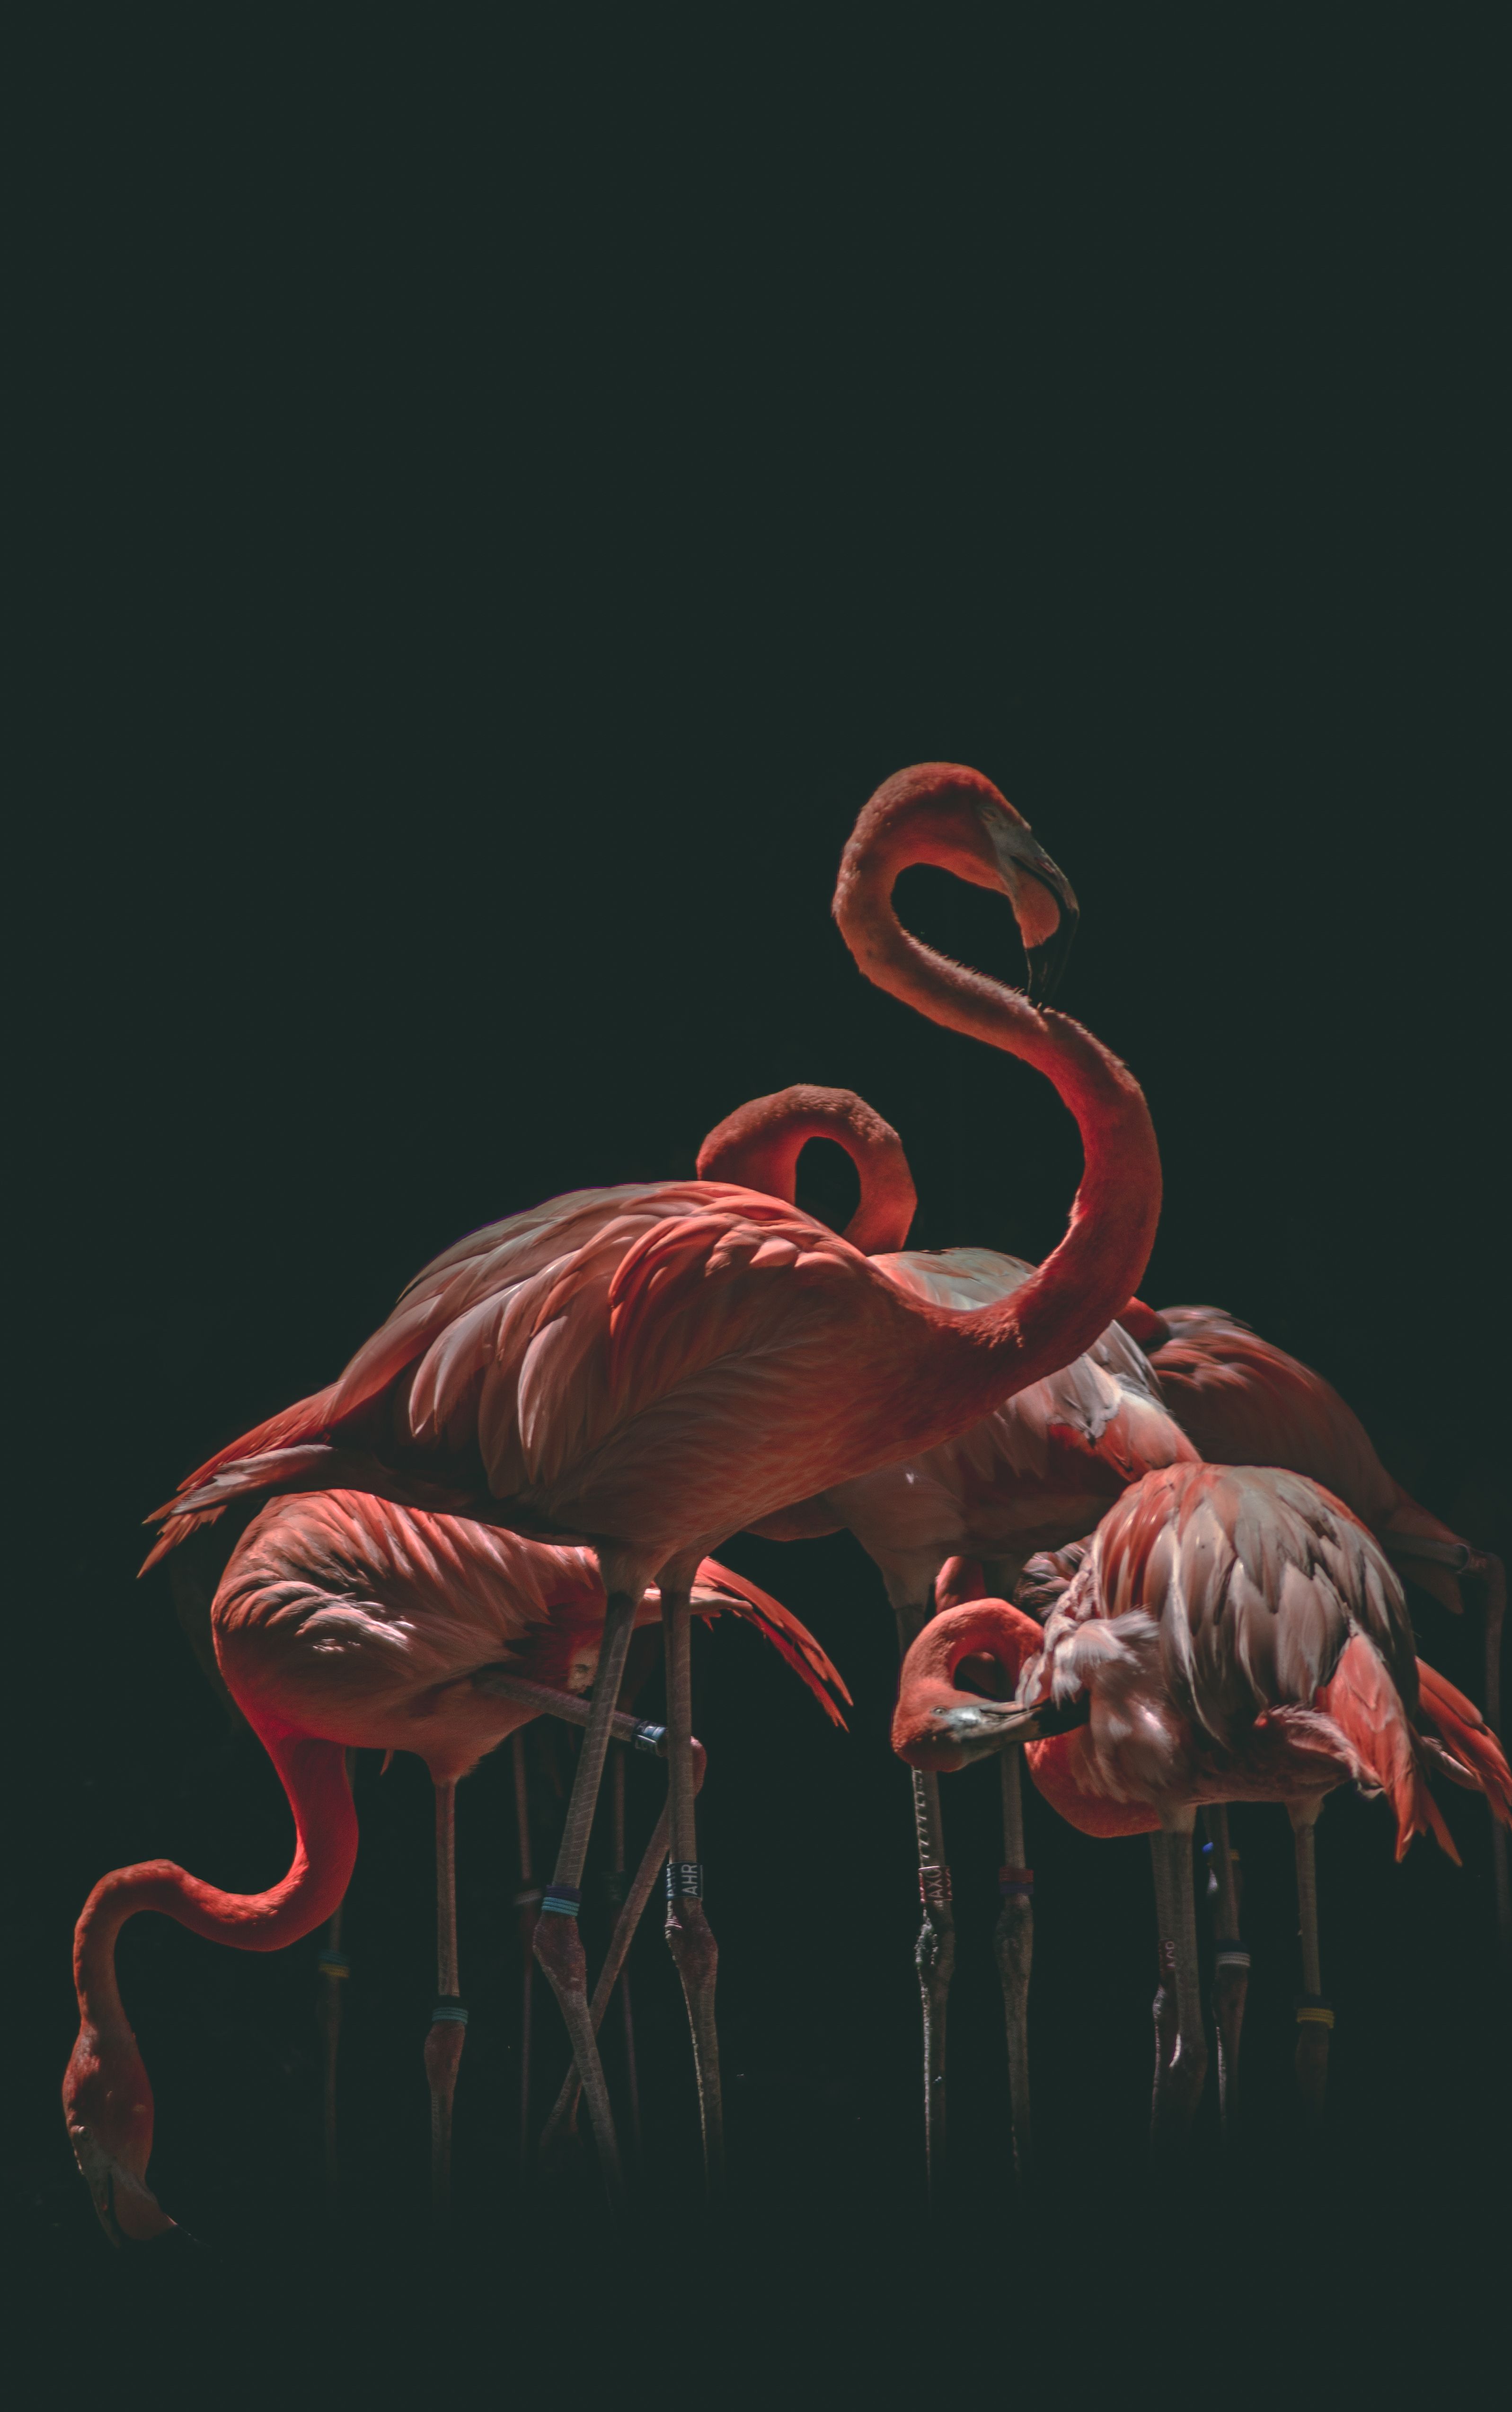  Flamingo Hintergrundbild 3195x5096. Flamingo Bilder Und Fotos · Kostenlos Downloaden · Stock Fotos